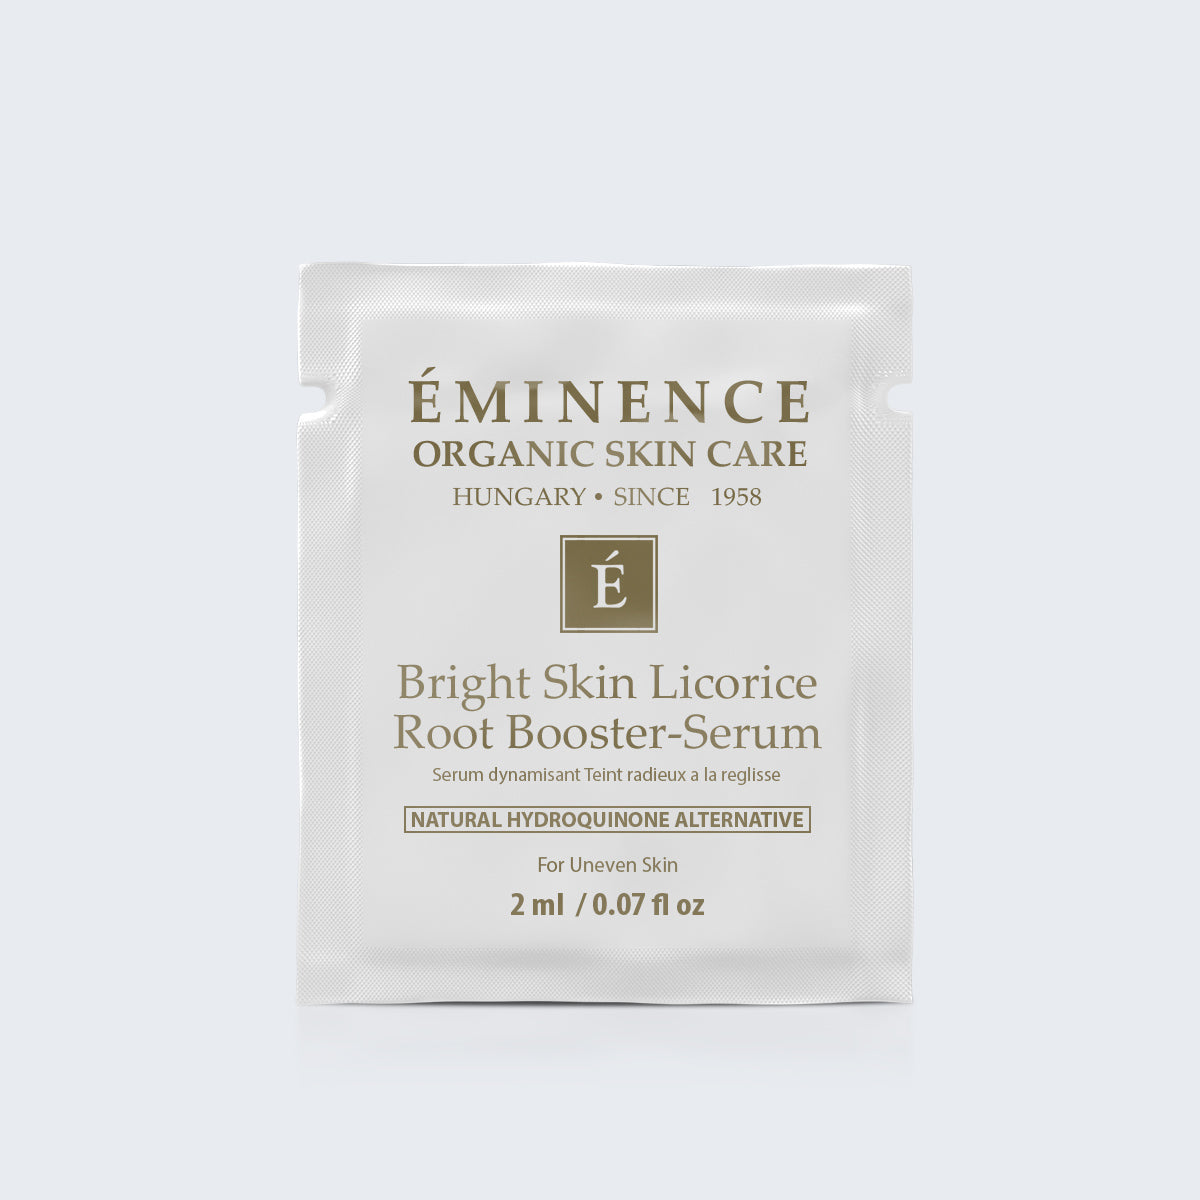 Eminence Organics Bright Skin Licorice Root Booster-Serum Card Sample